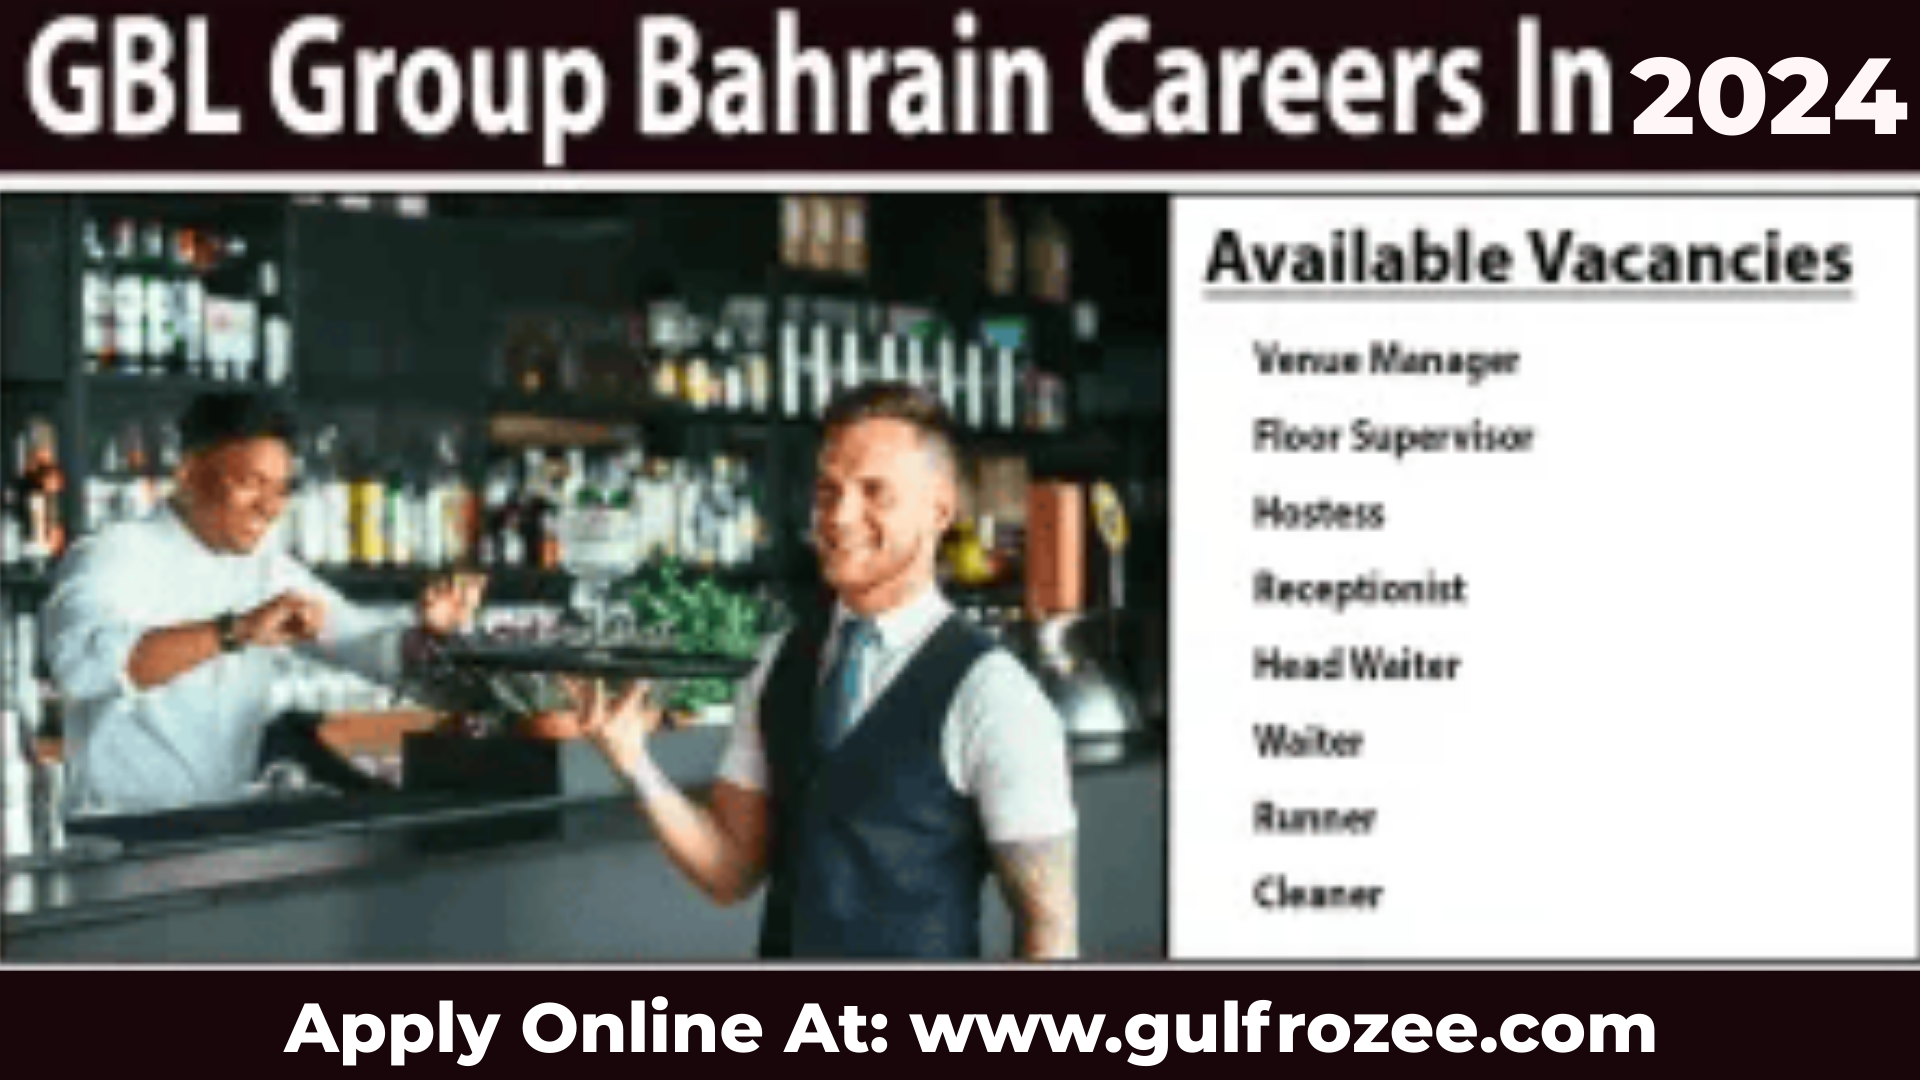 GBL Group Bahrain Careers 2024